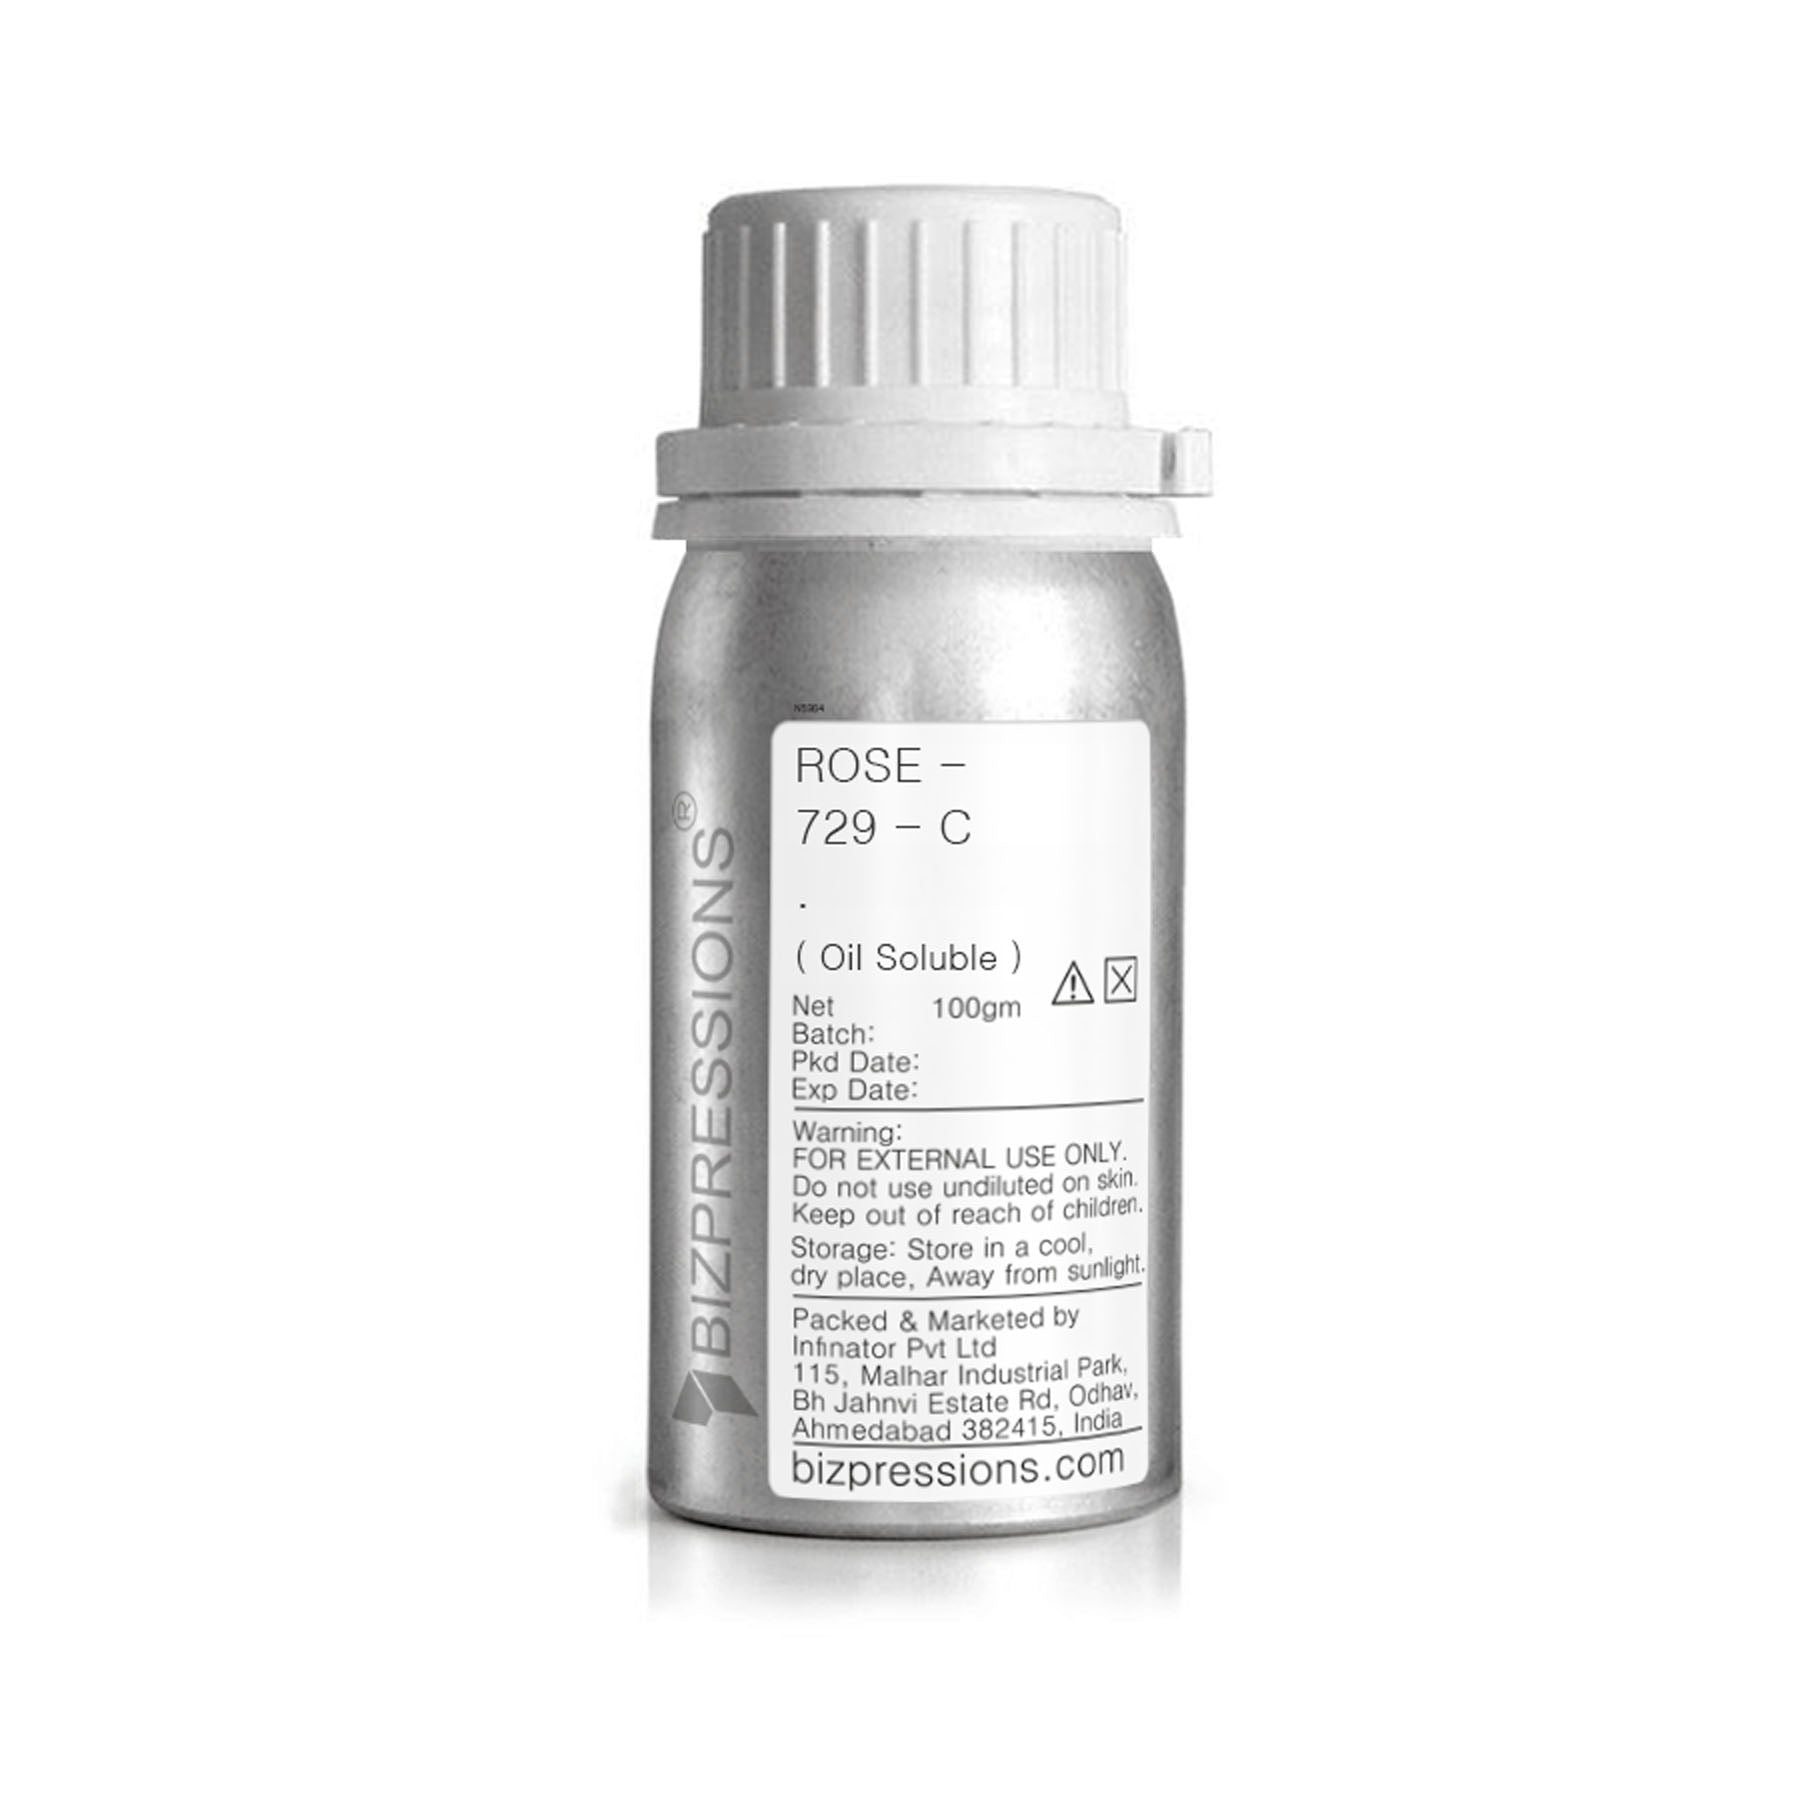 ROSE - 729 - C - Fragrance ( Oil Soluble ) - 100 gm